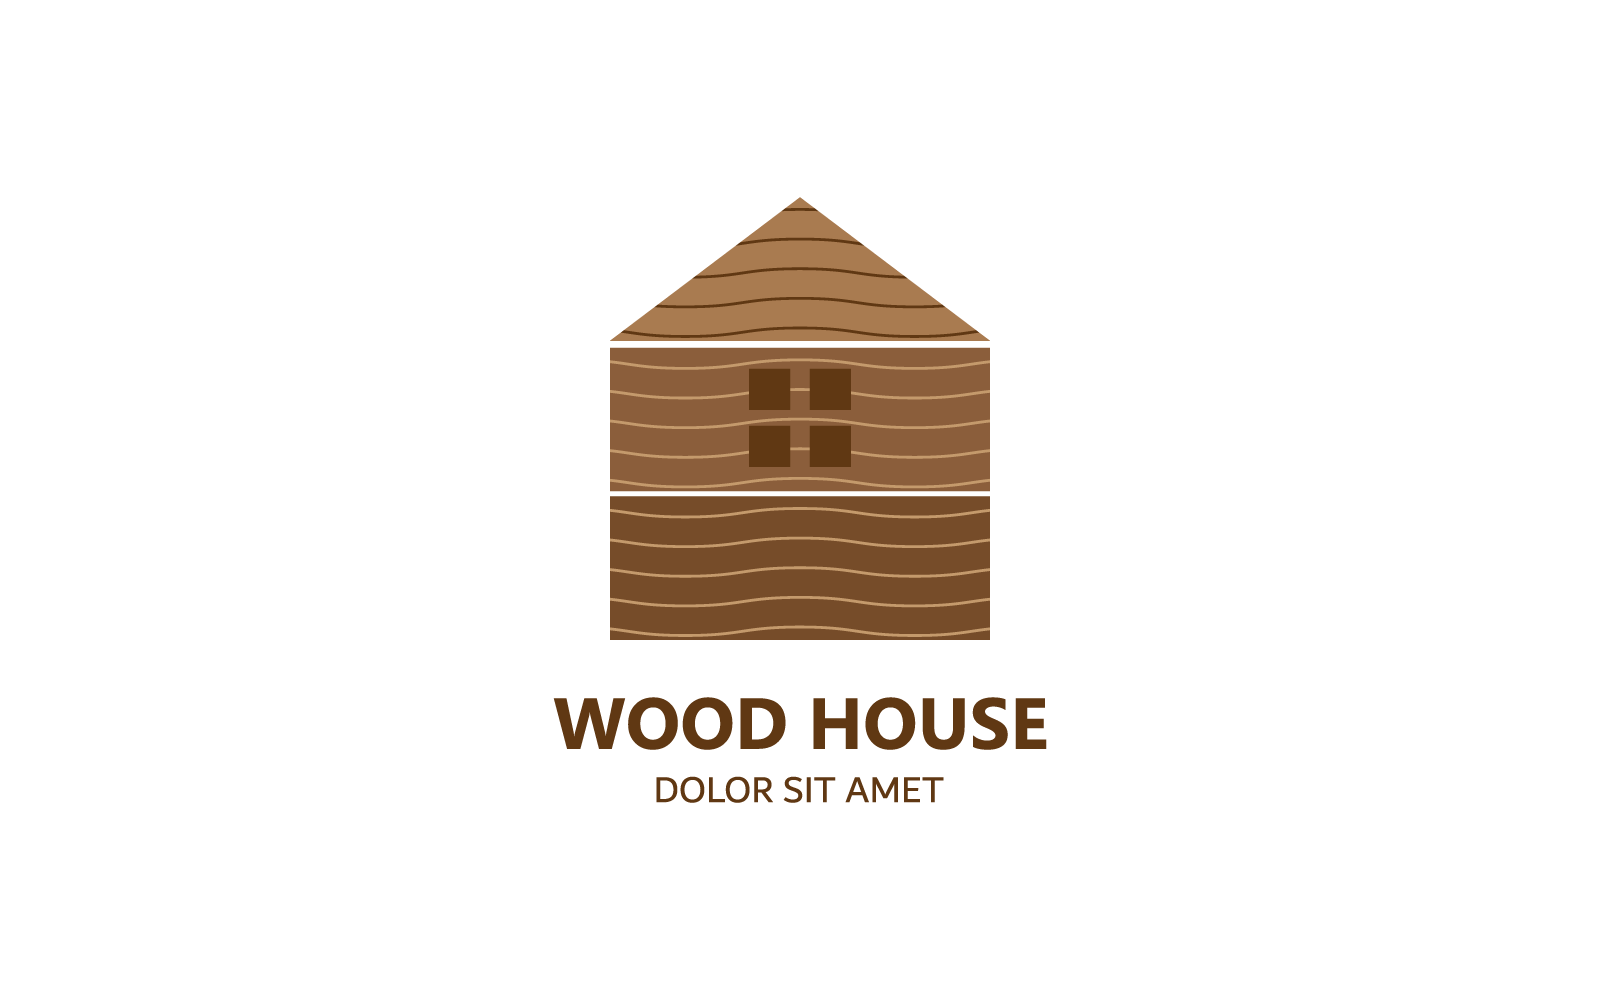 Wood house logo illustration vector flat design